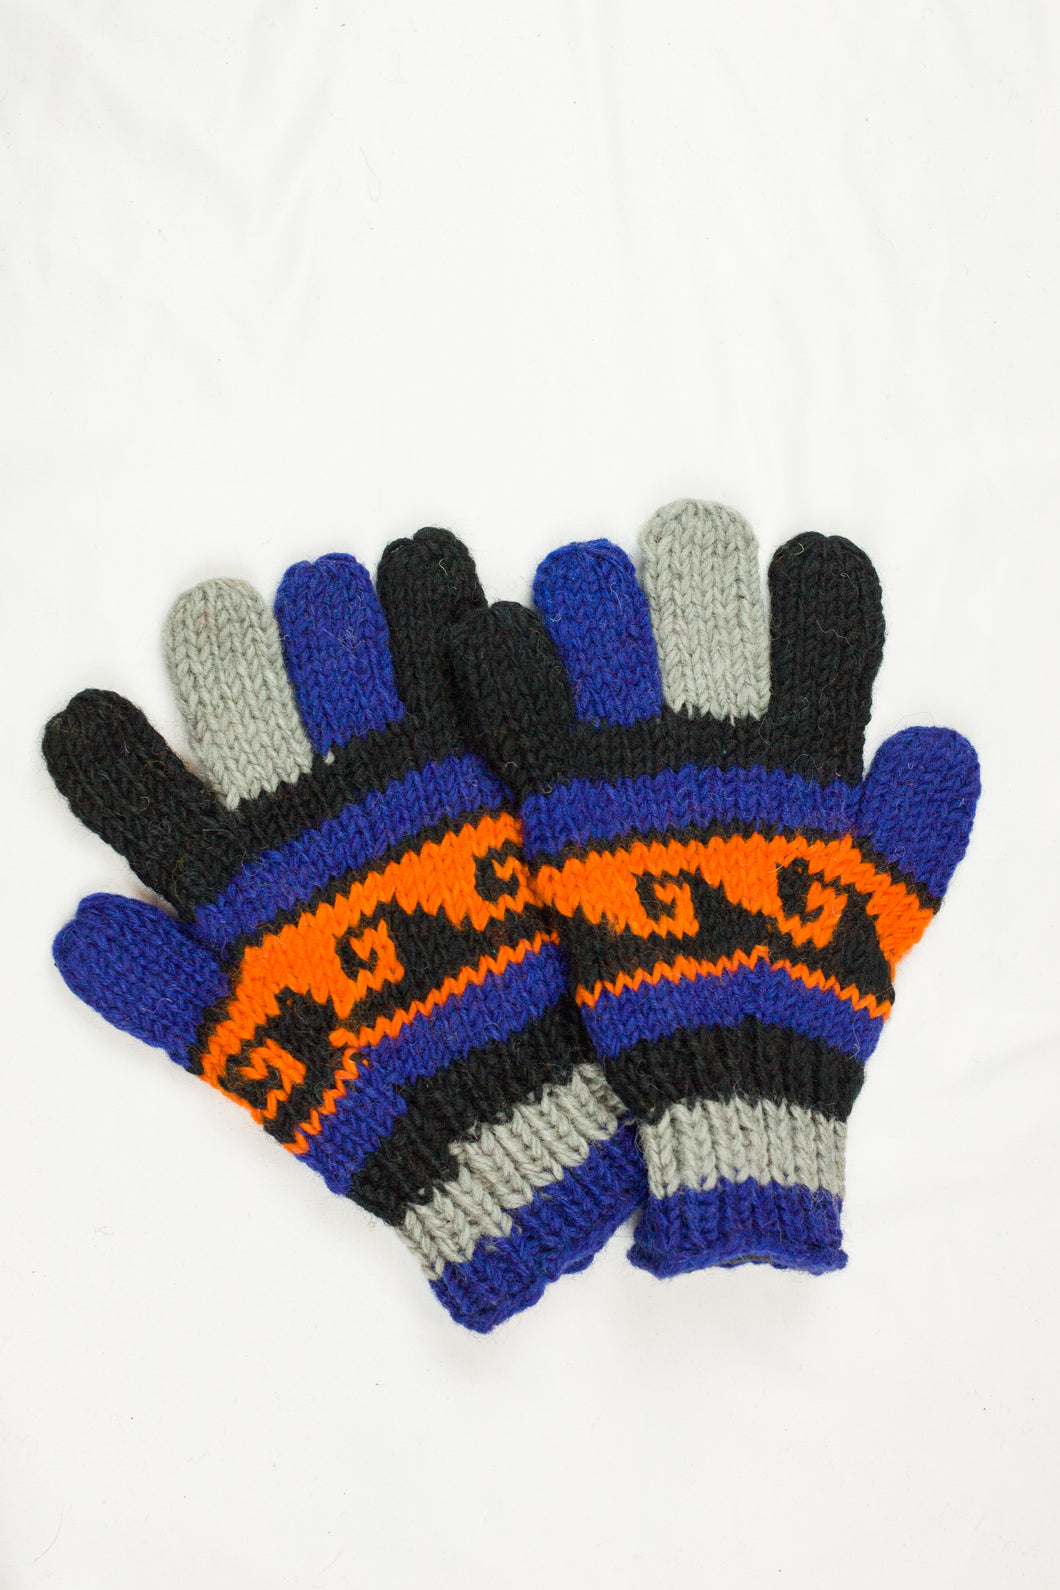 Hand knitted woolen gloves with soft inner fleece liner - unisex